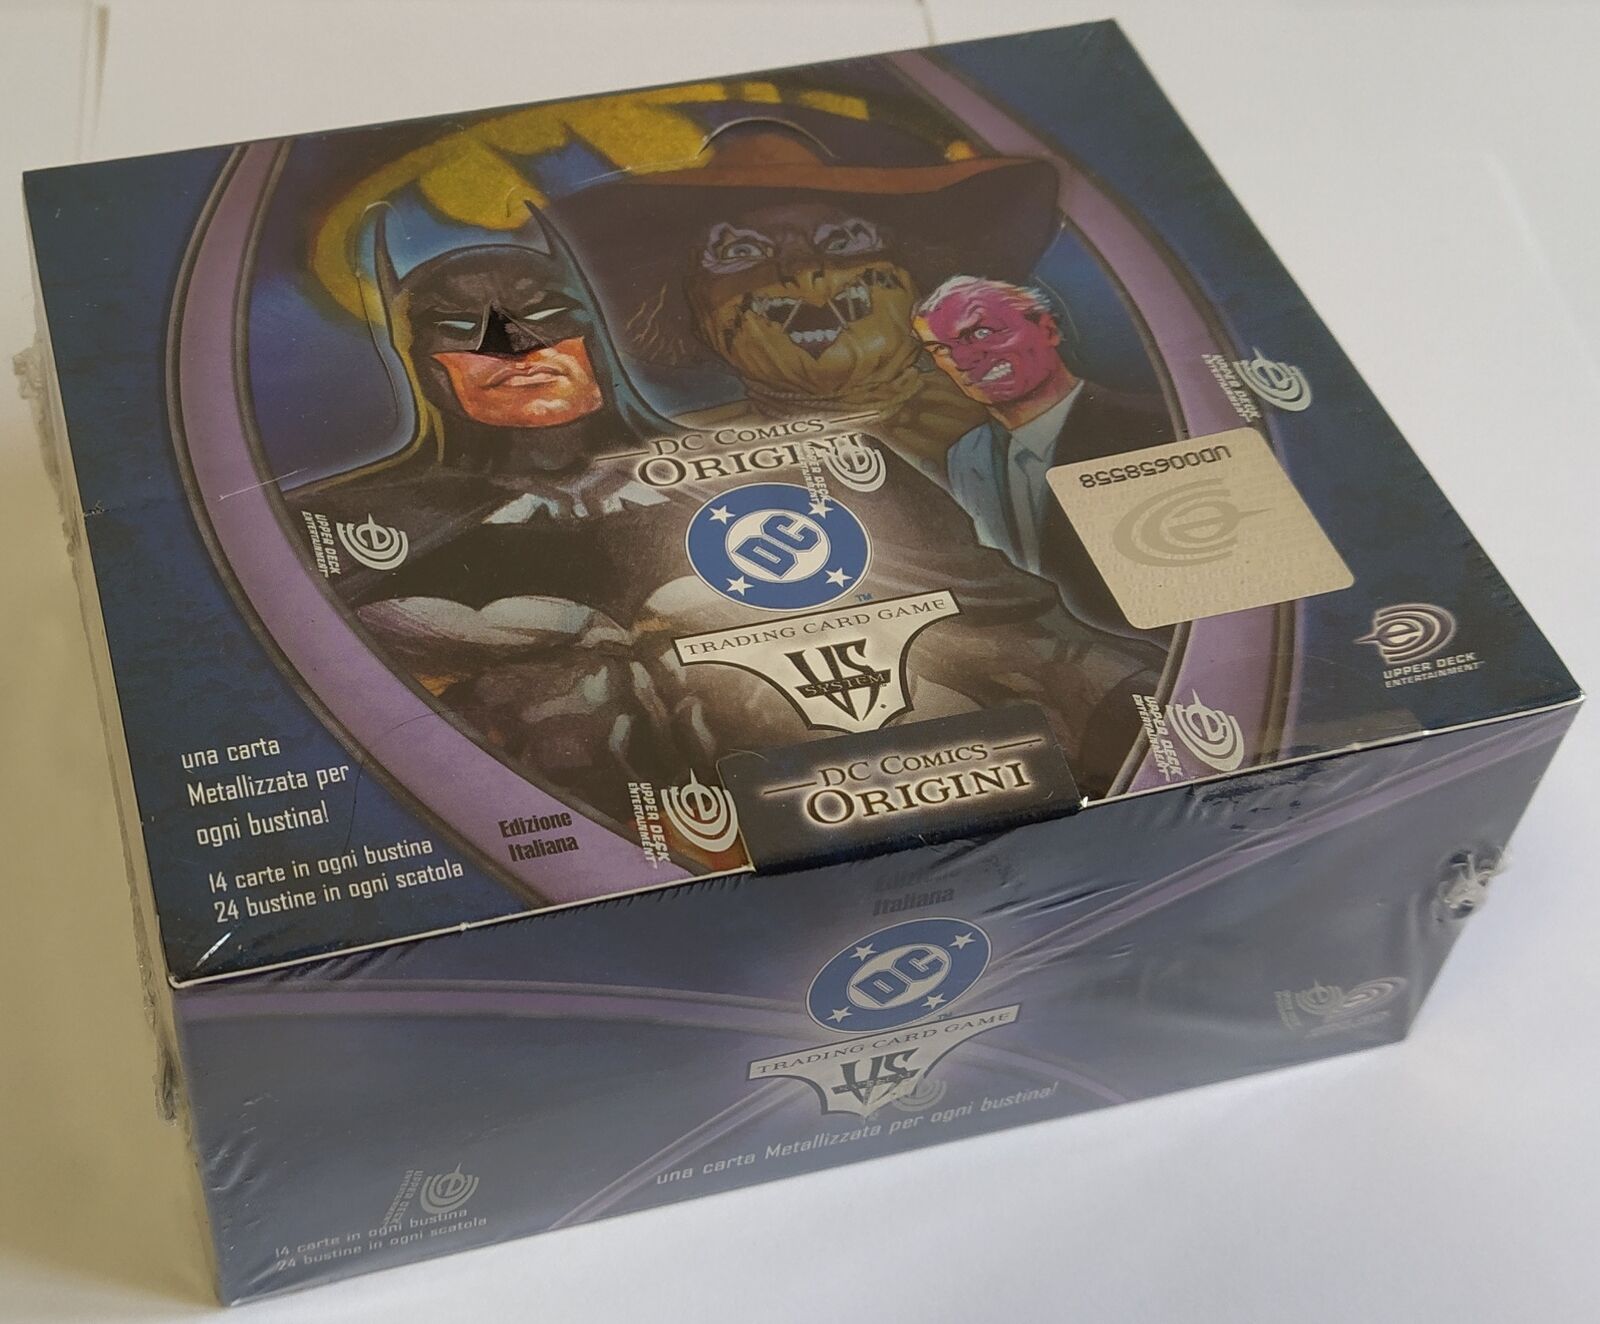 Vs System DC Comics Origins Box 24 Bag Cards Ed. Italy